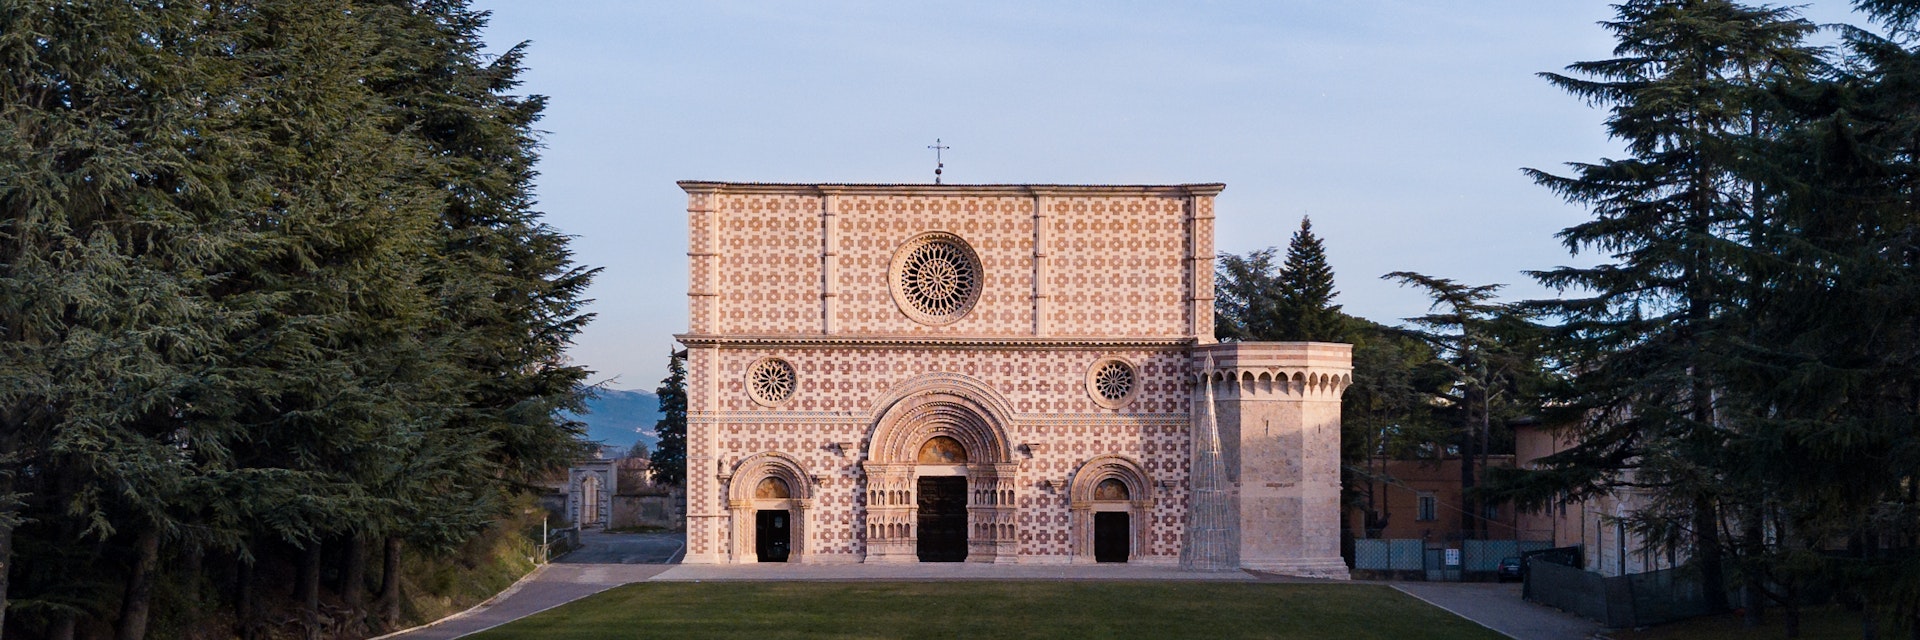 Santa Maria di Collemaggio basilica facade